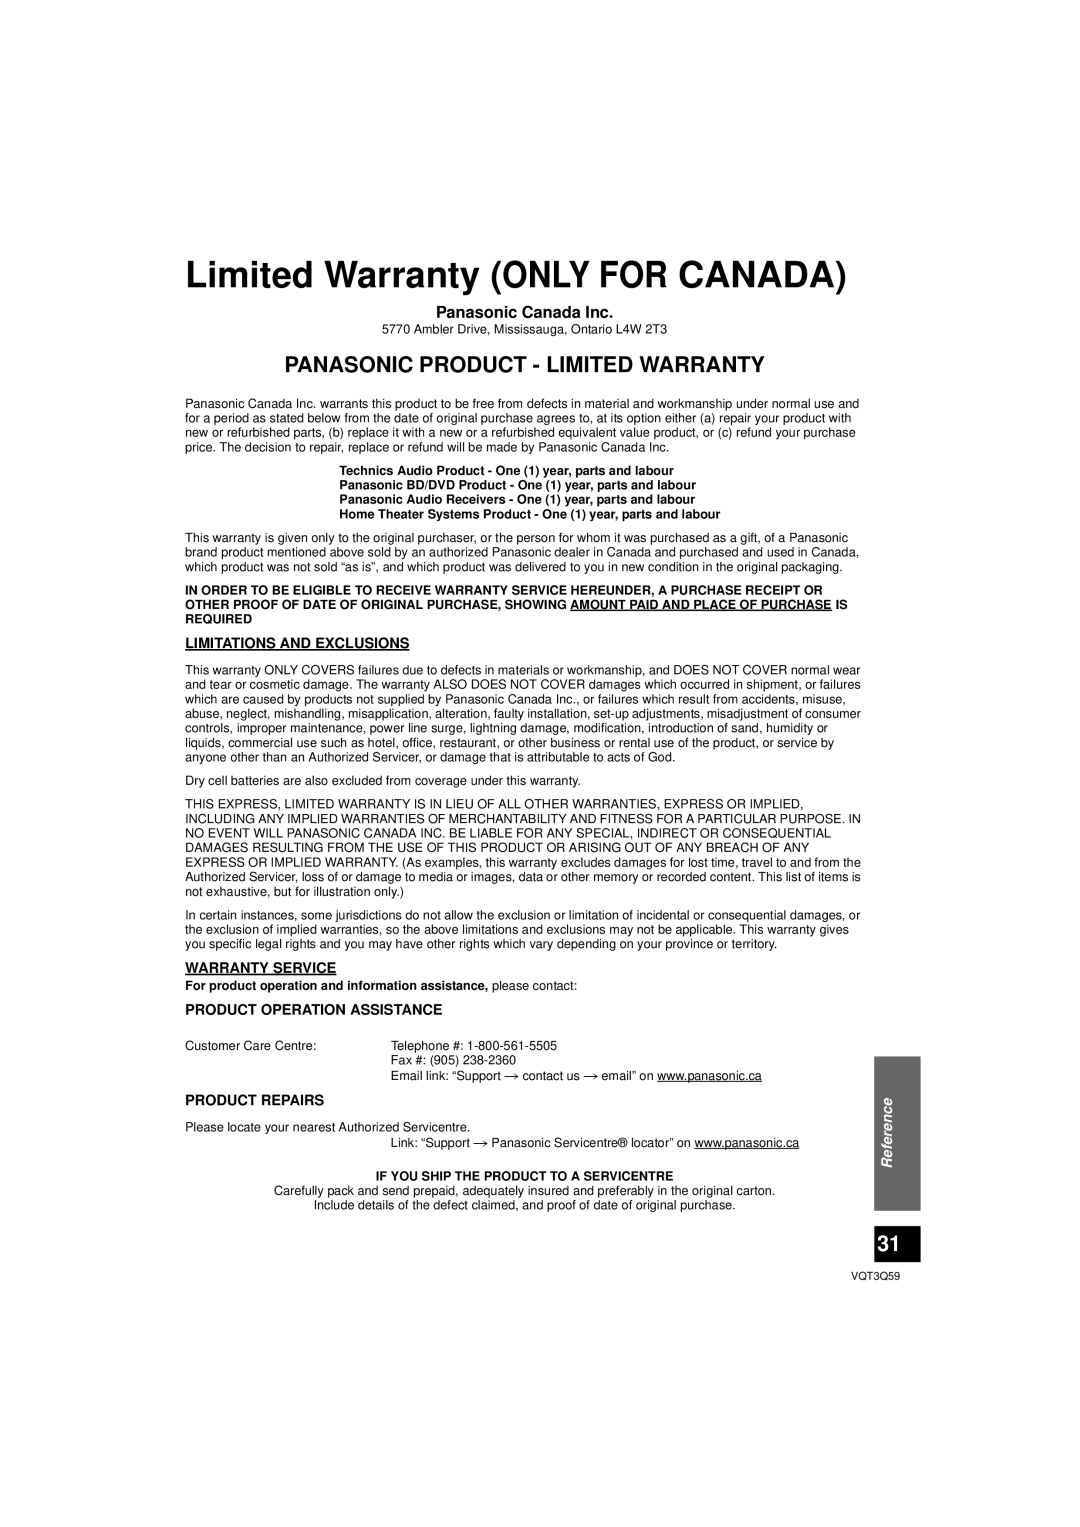 Panasonic SC-HTB15 Panasonic Product - Limited Warranty, Limited Warranty ONLY FOR CANADA, Panasonic Canada Inc, Reference 